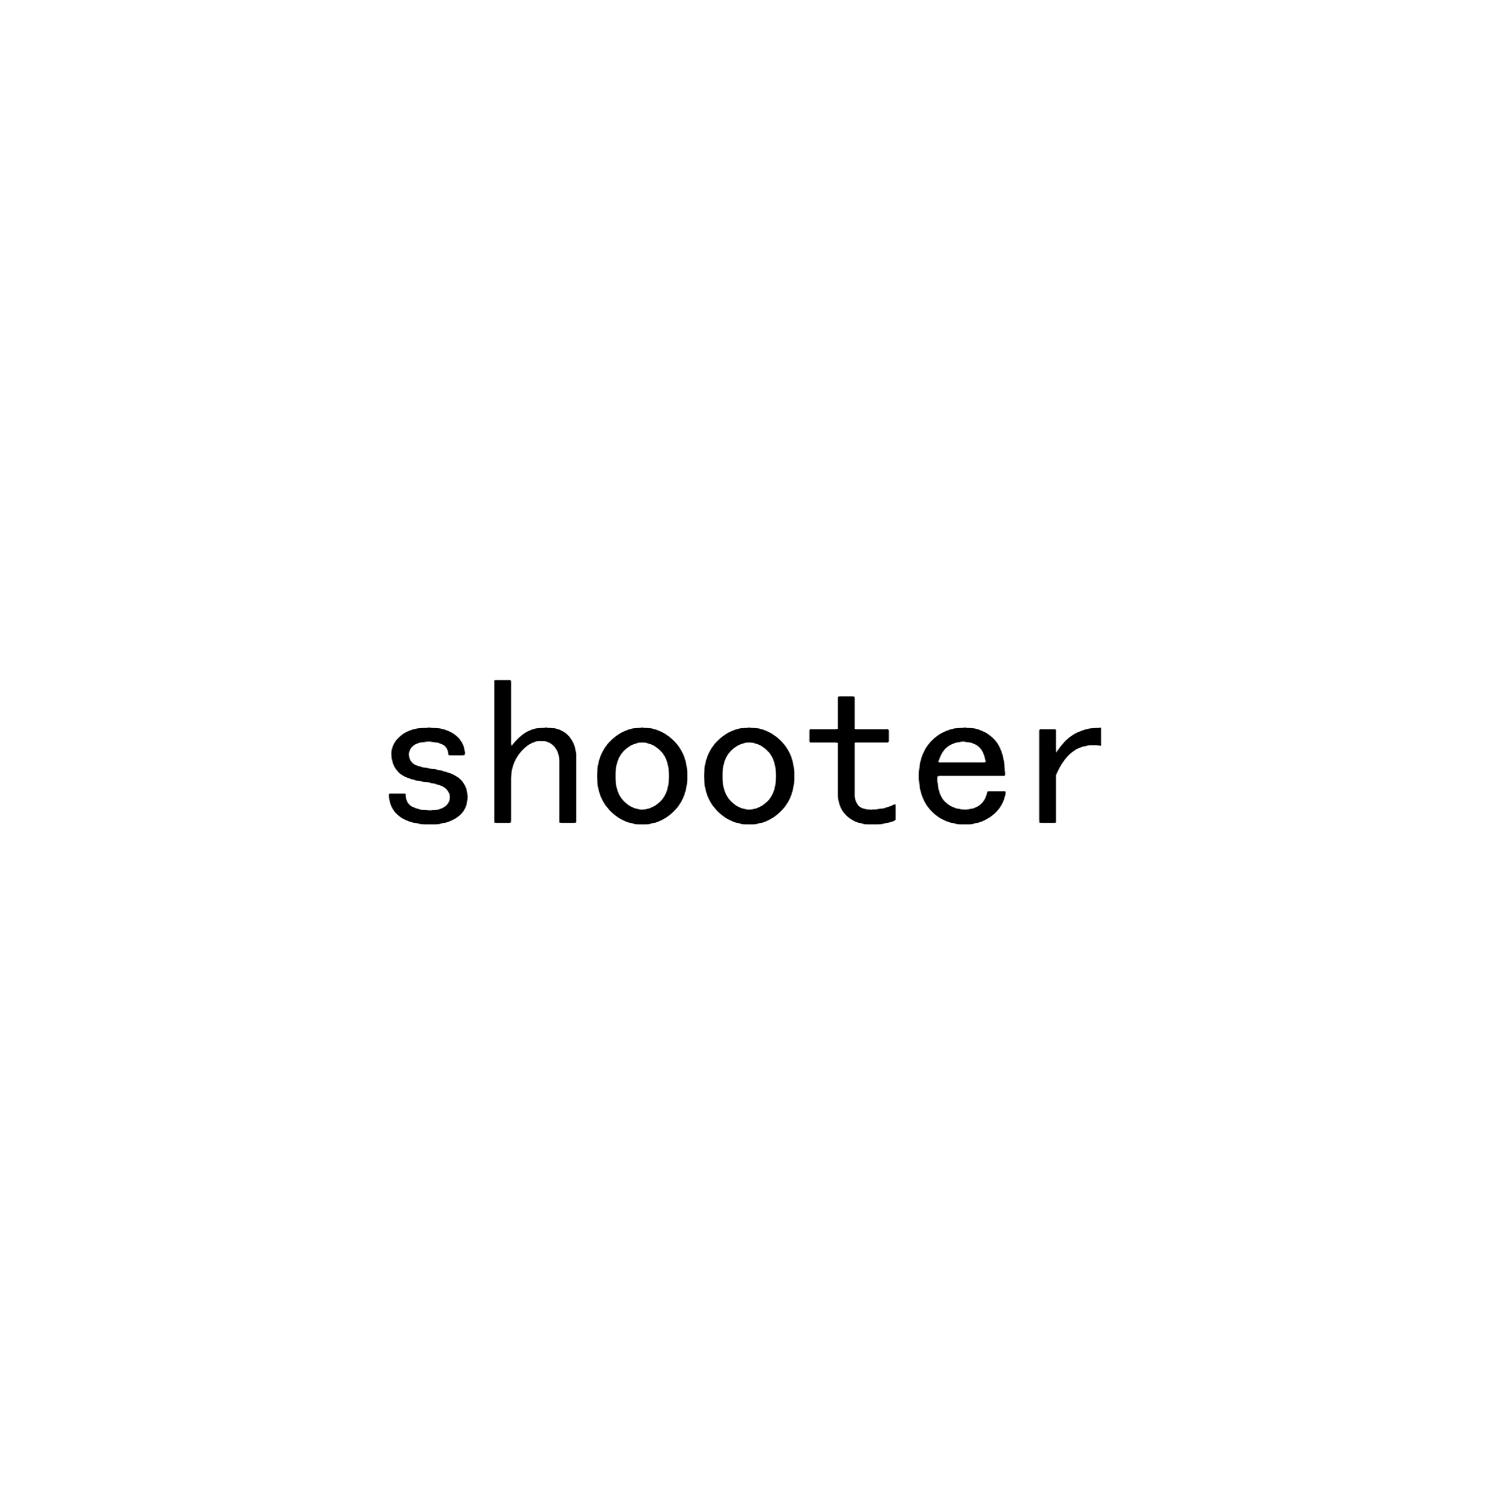 SHOOTER商标转让